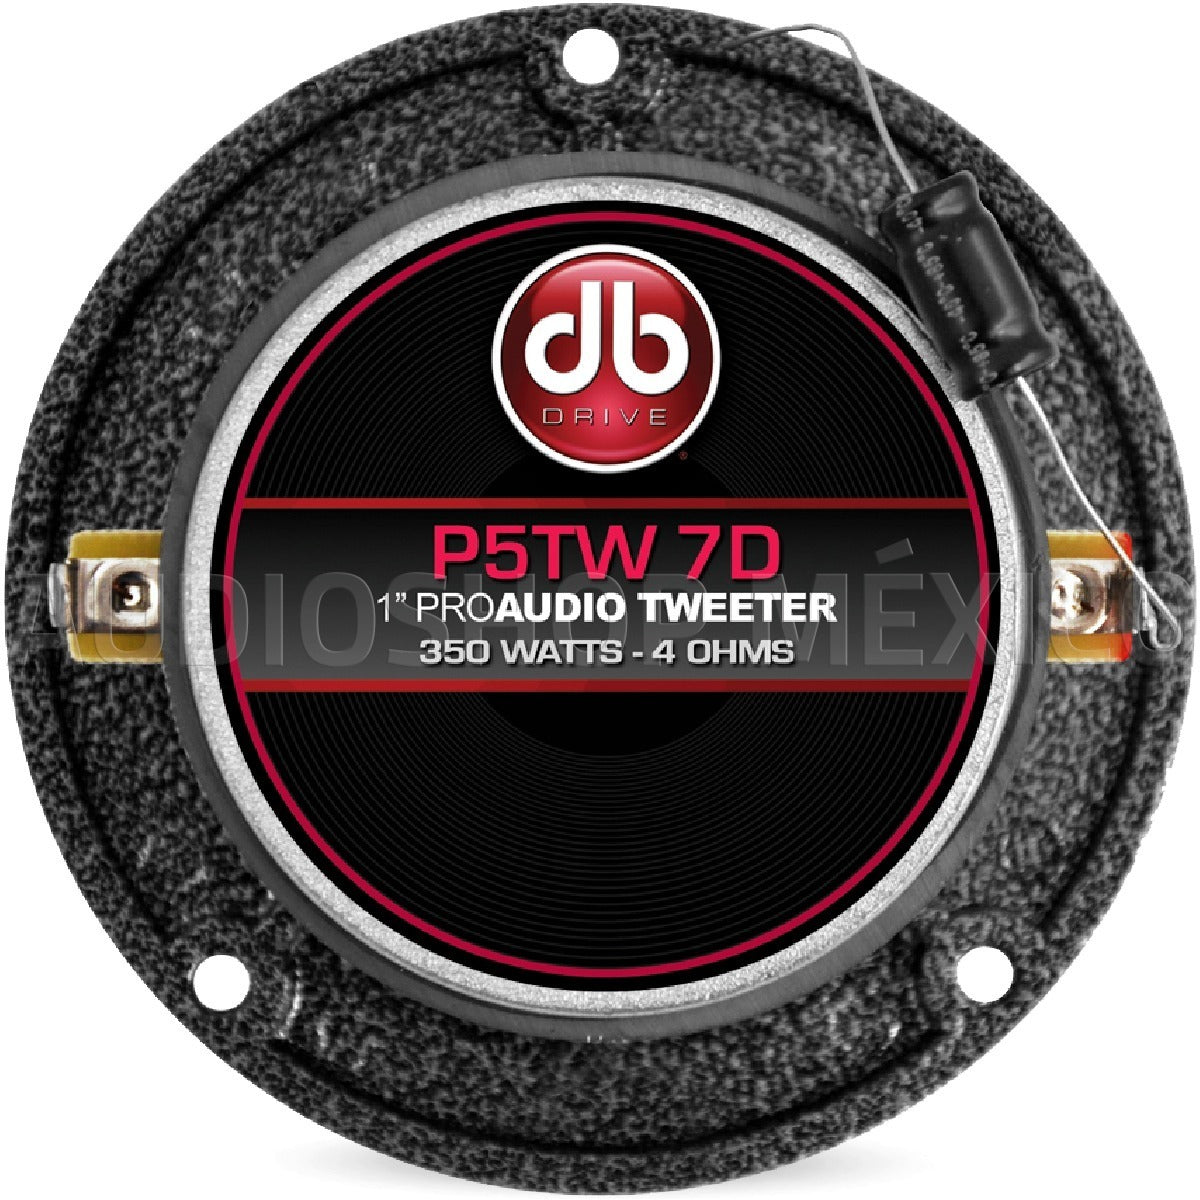 Par de Tweeters de aluminio DB Drive P5TW 7D 350 Watts 1 Pulgada 4 Ohms Pro Audio - Audioshop México lo mejor en Car Audio en México -  DB Drive